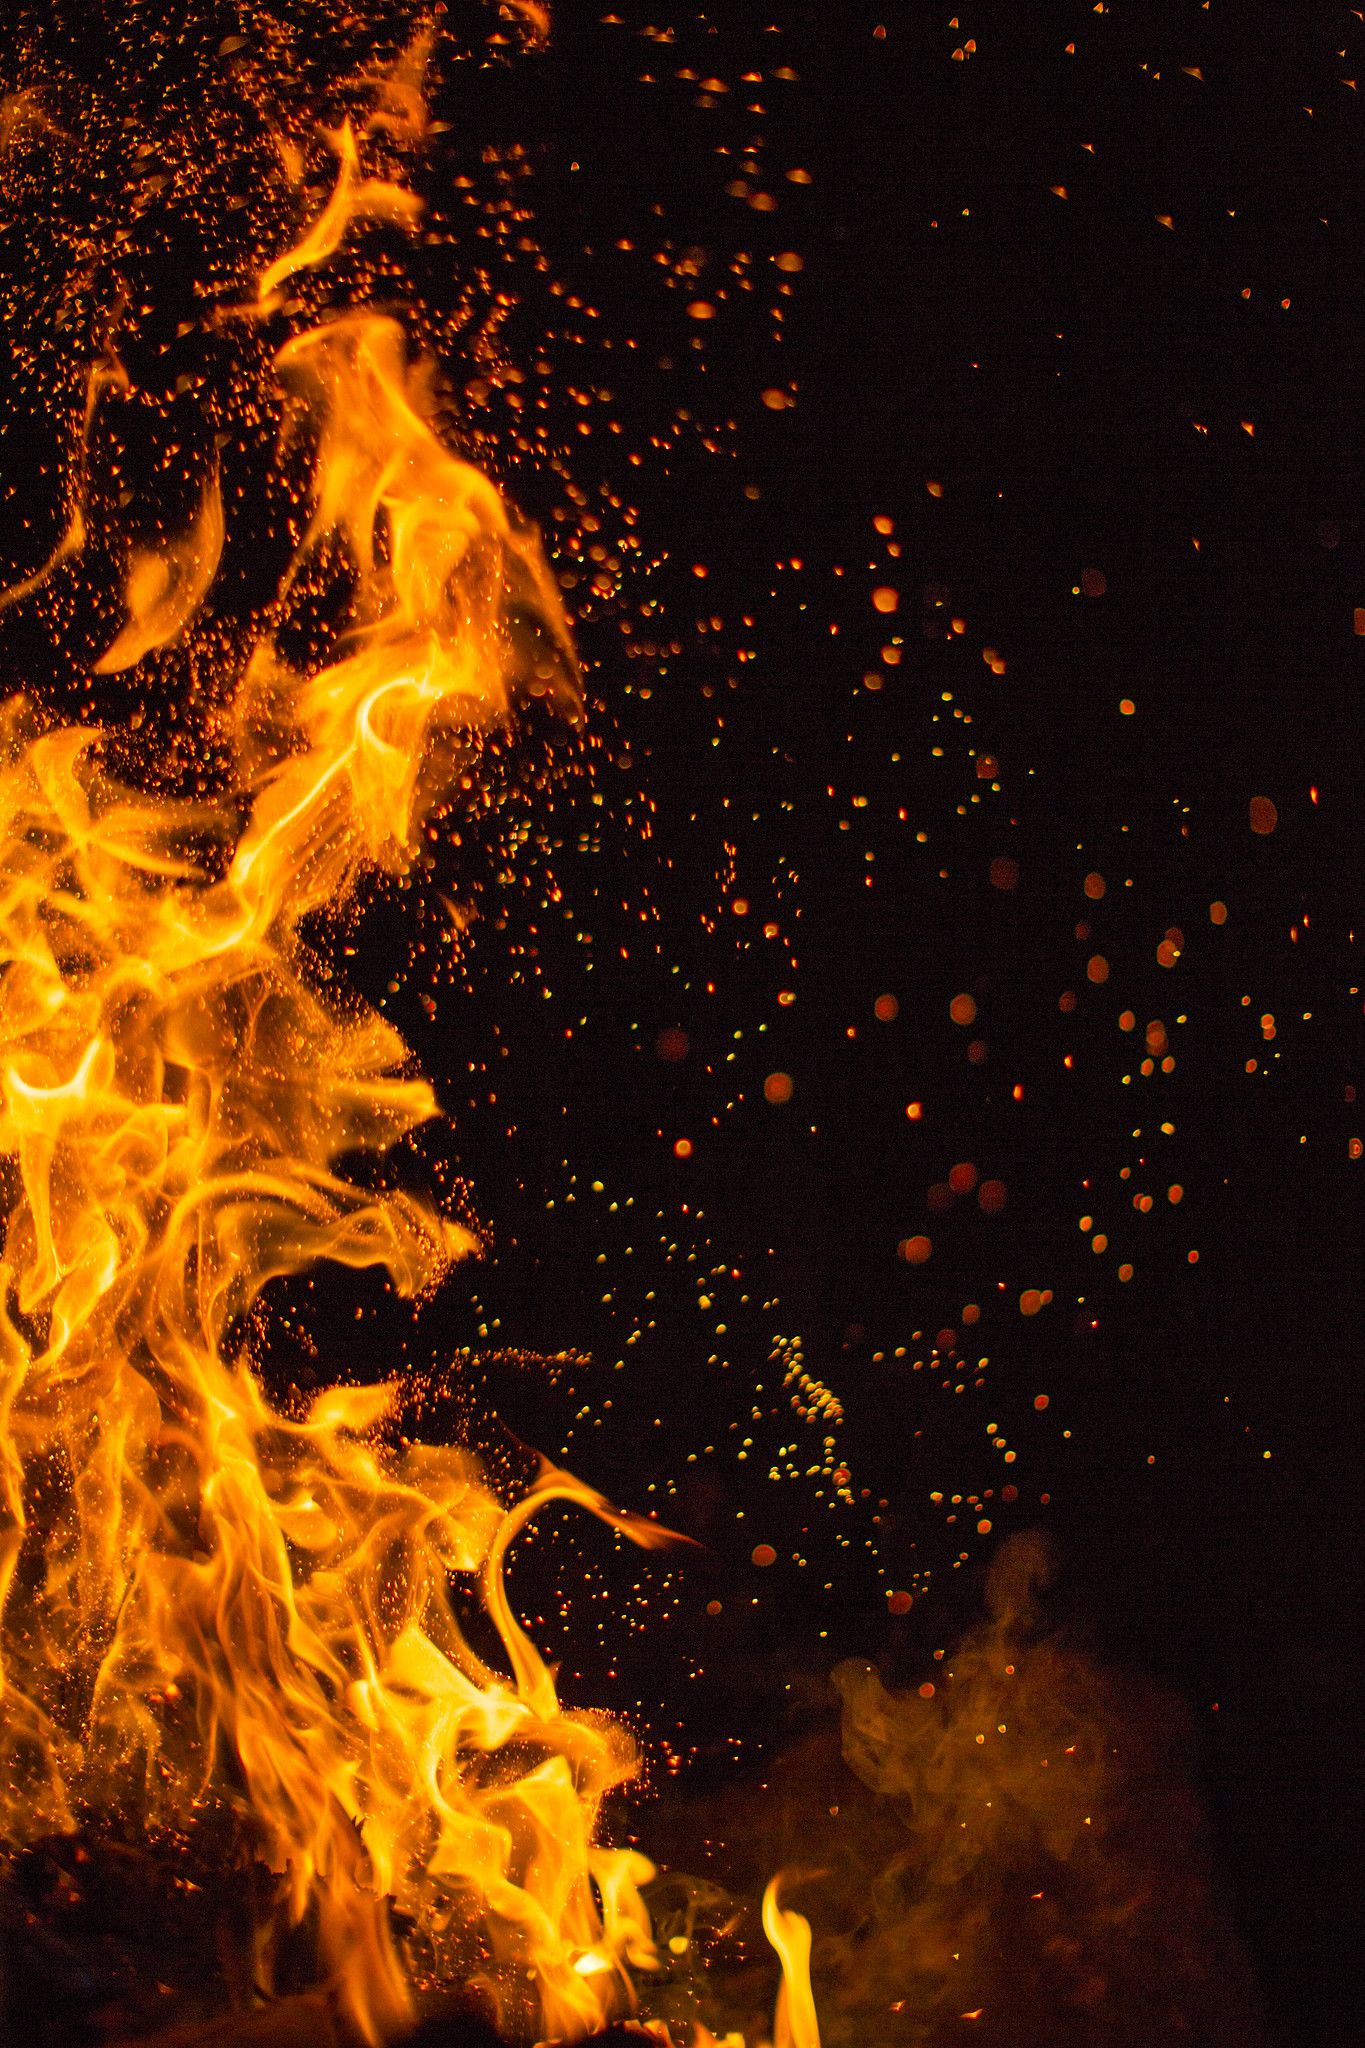 Stir up the fire. Light background image, Black background image, Best background image